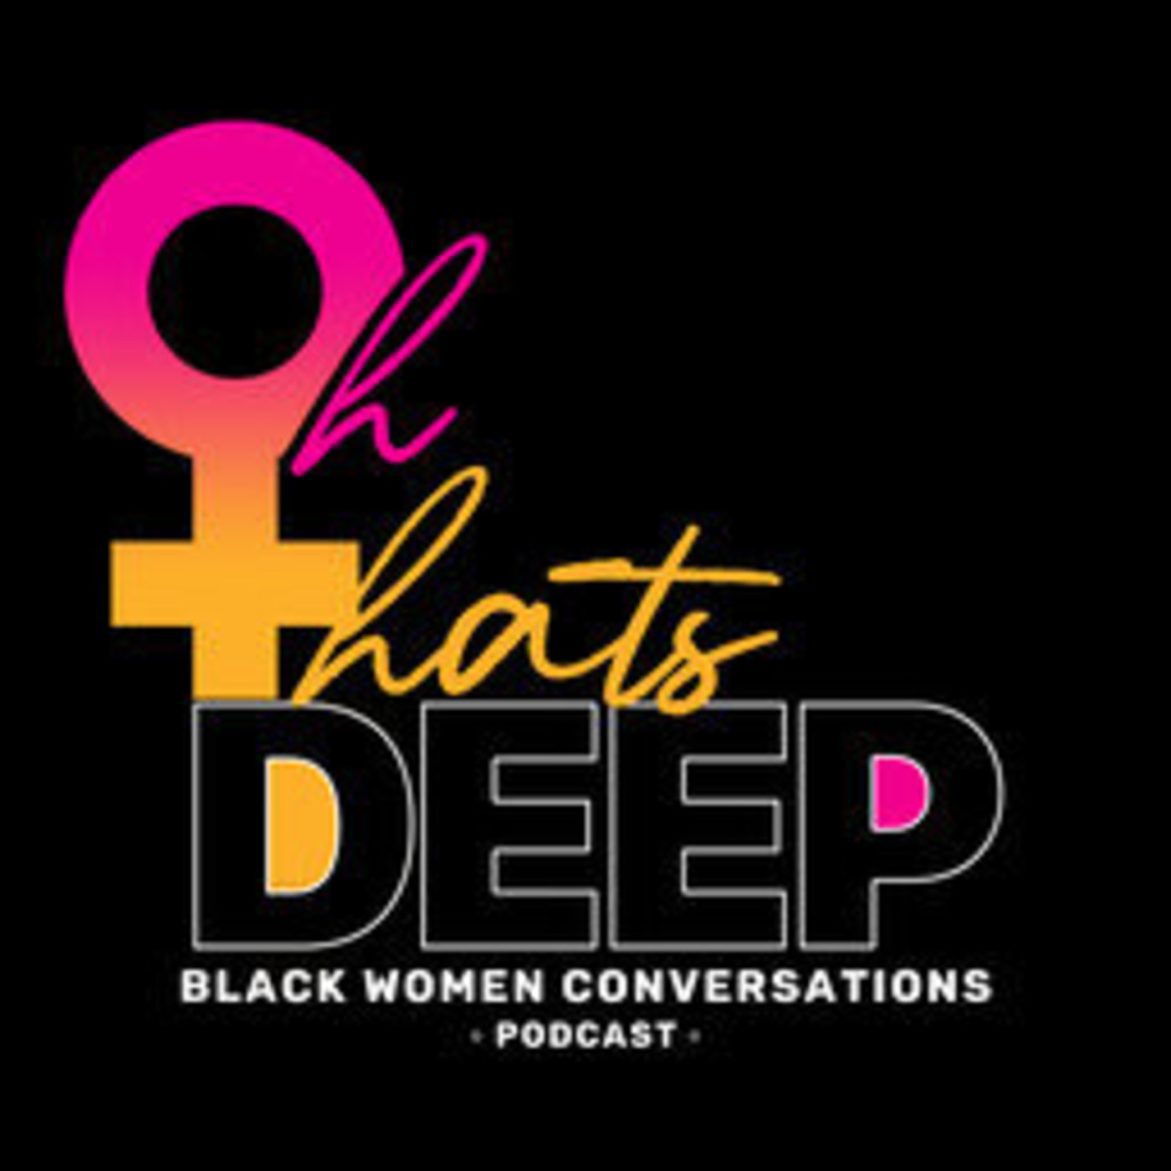 Black Podcasting - Money Vs. Education